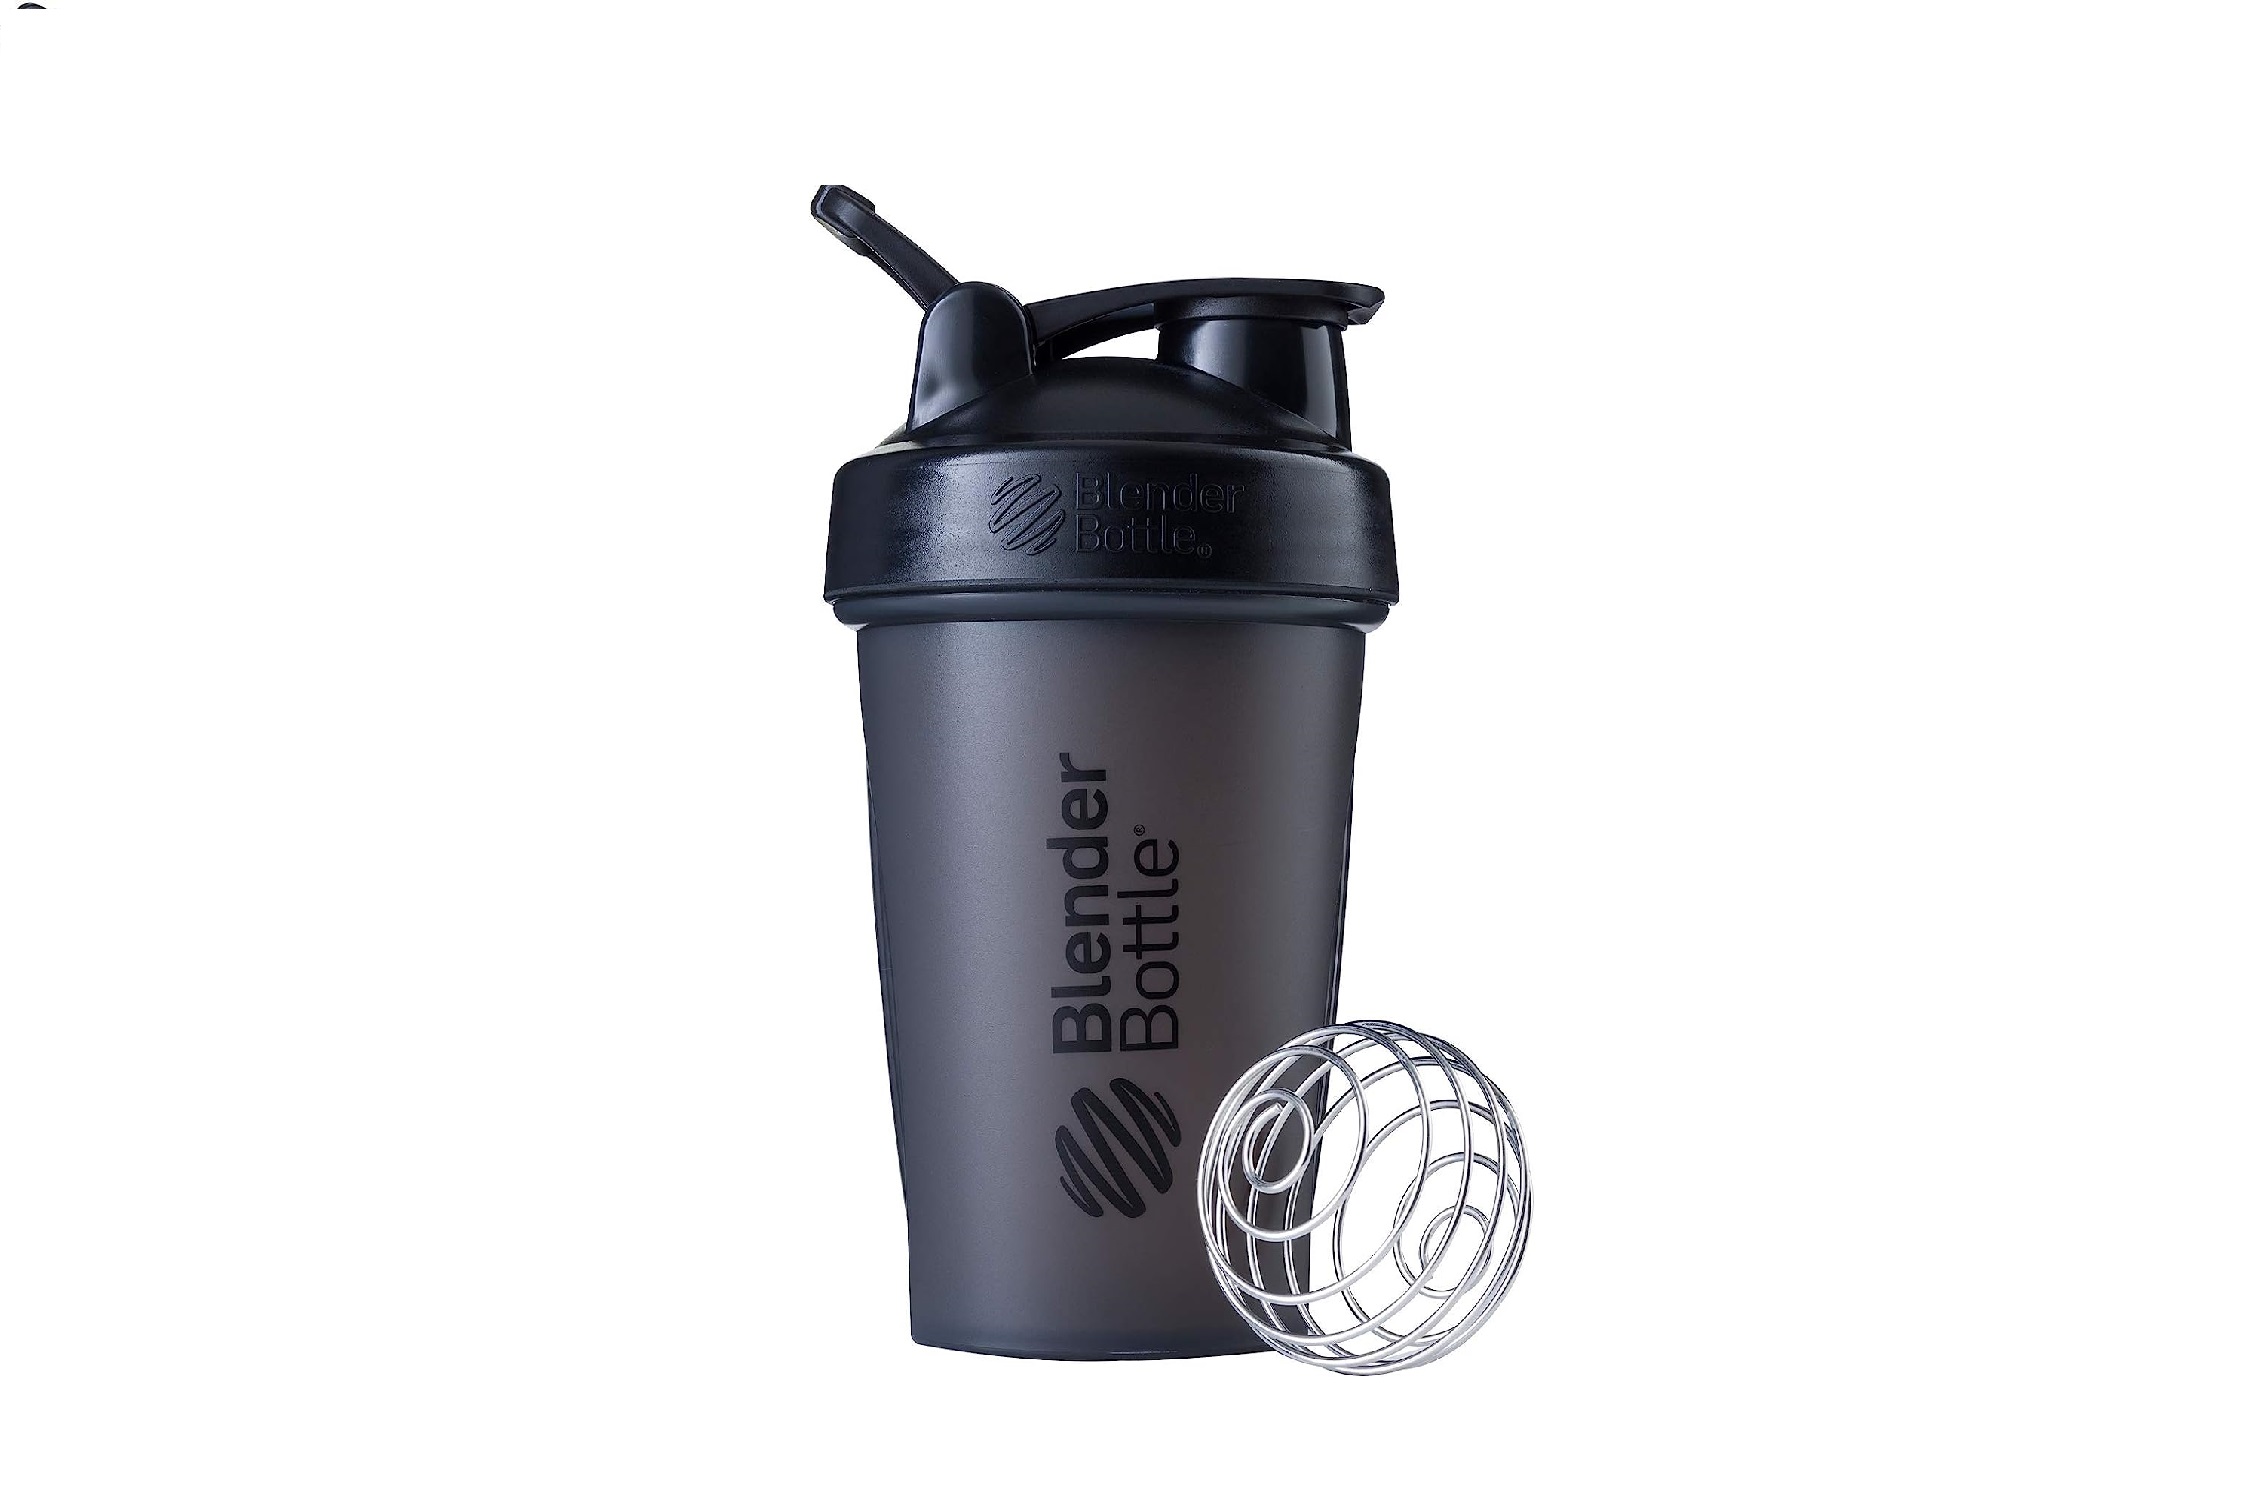 BlenderBottle SportMixer Twist Cap Tritan Grip Shaker Bottle, 20-Ounce, Black